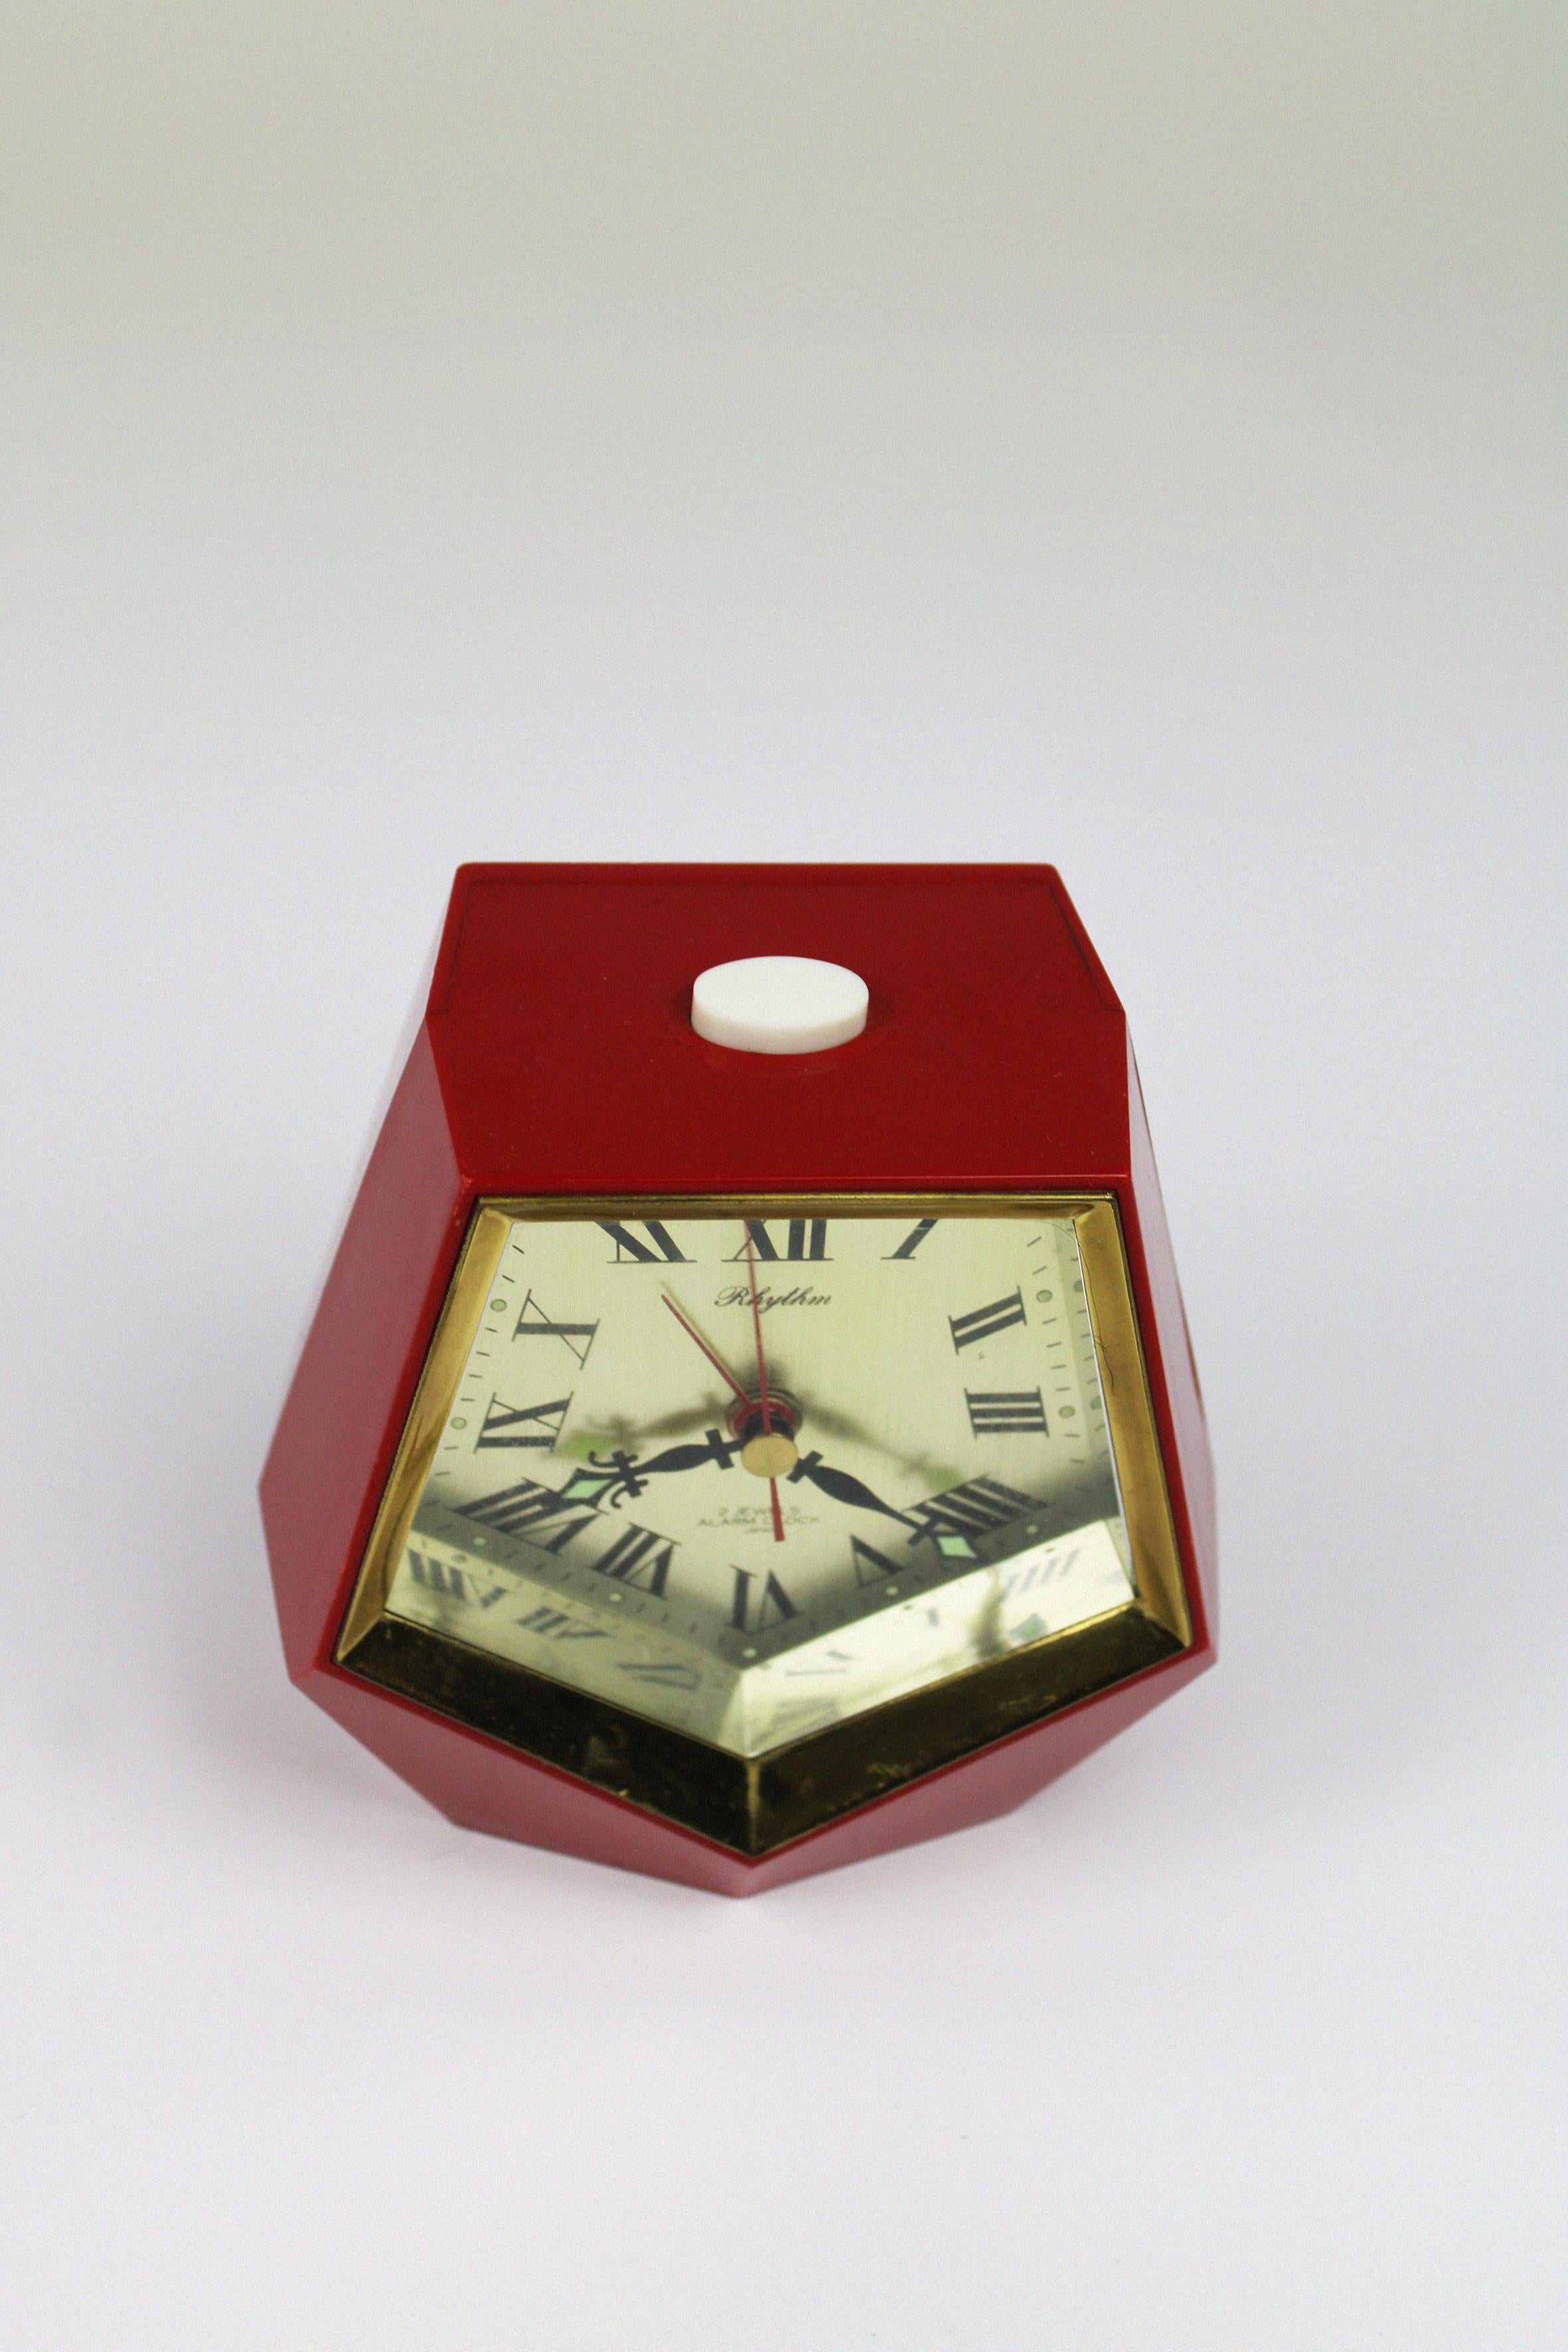 Japanese Alarm Clock Rhythm 1960s Japan Vintage Red Gold Hexadecahedron